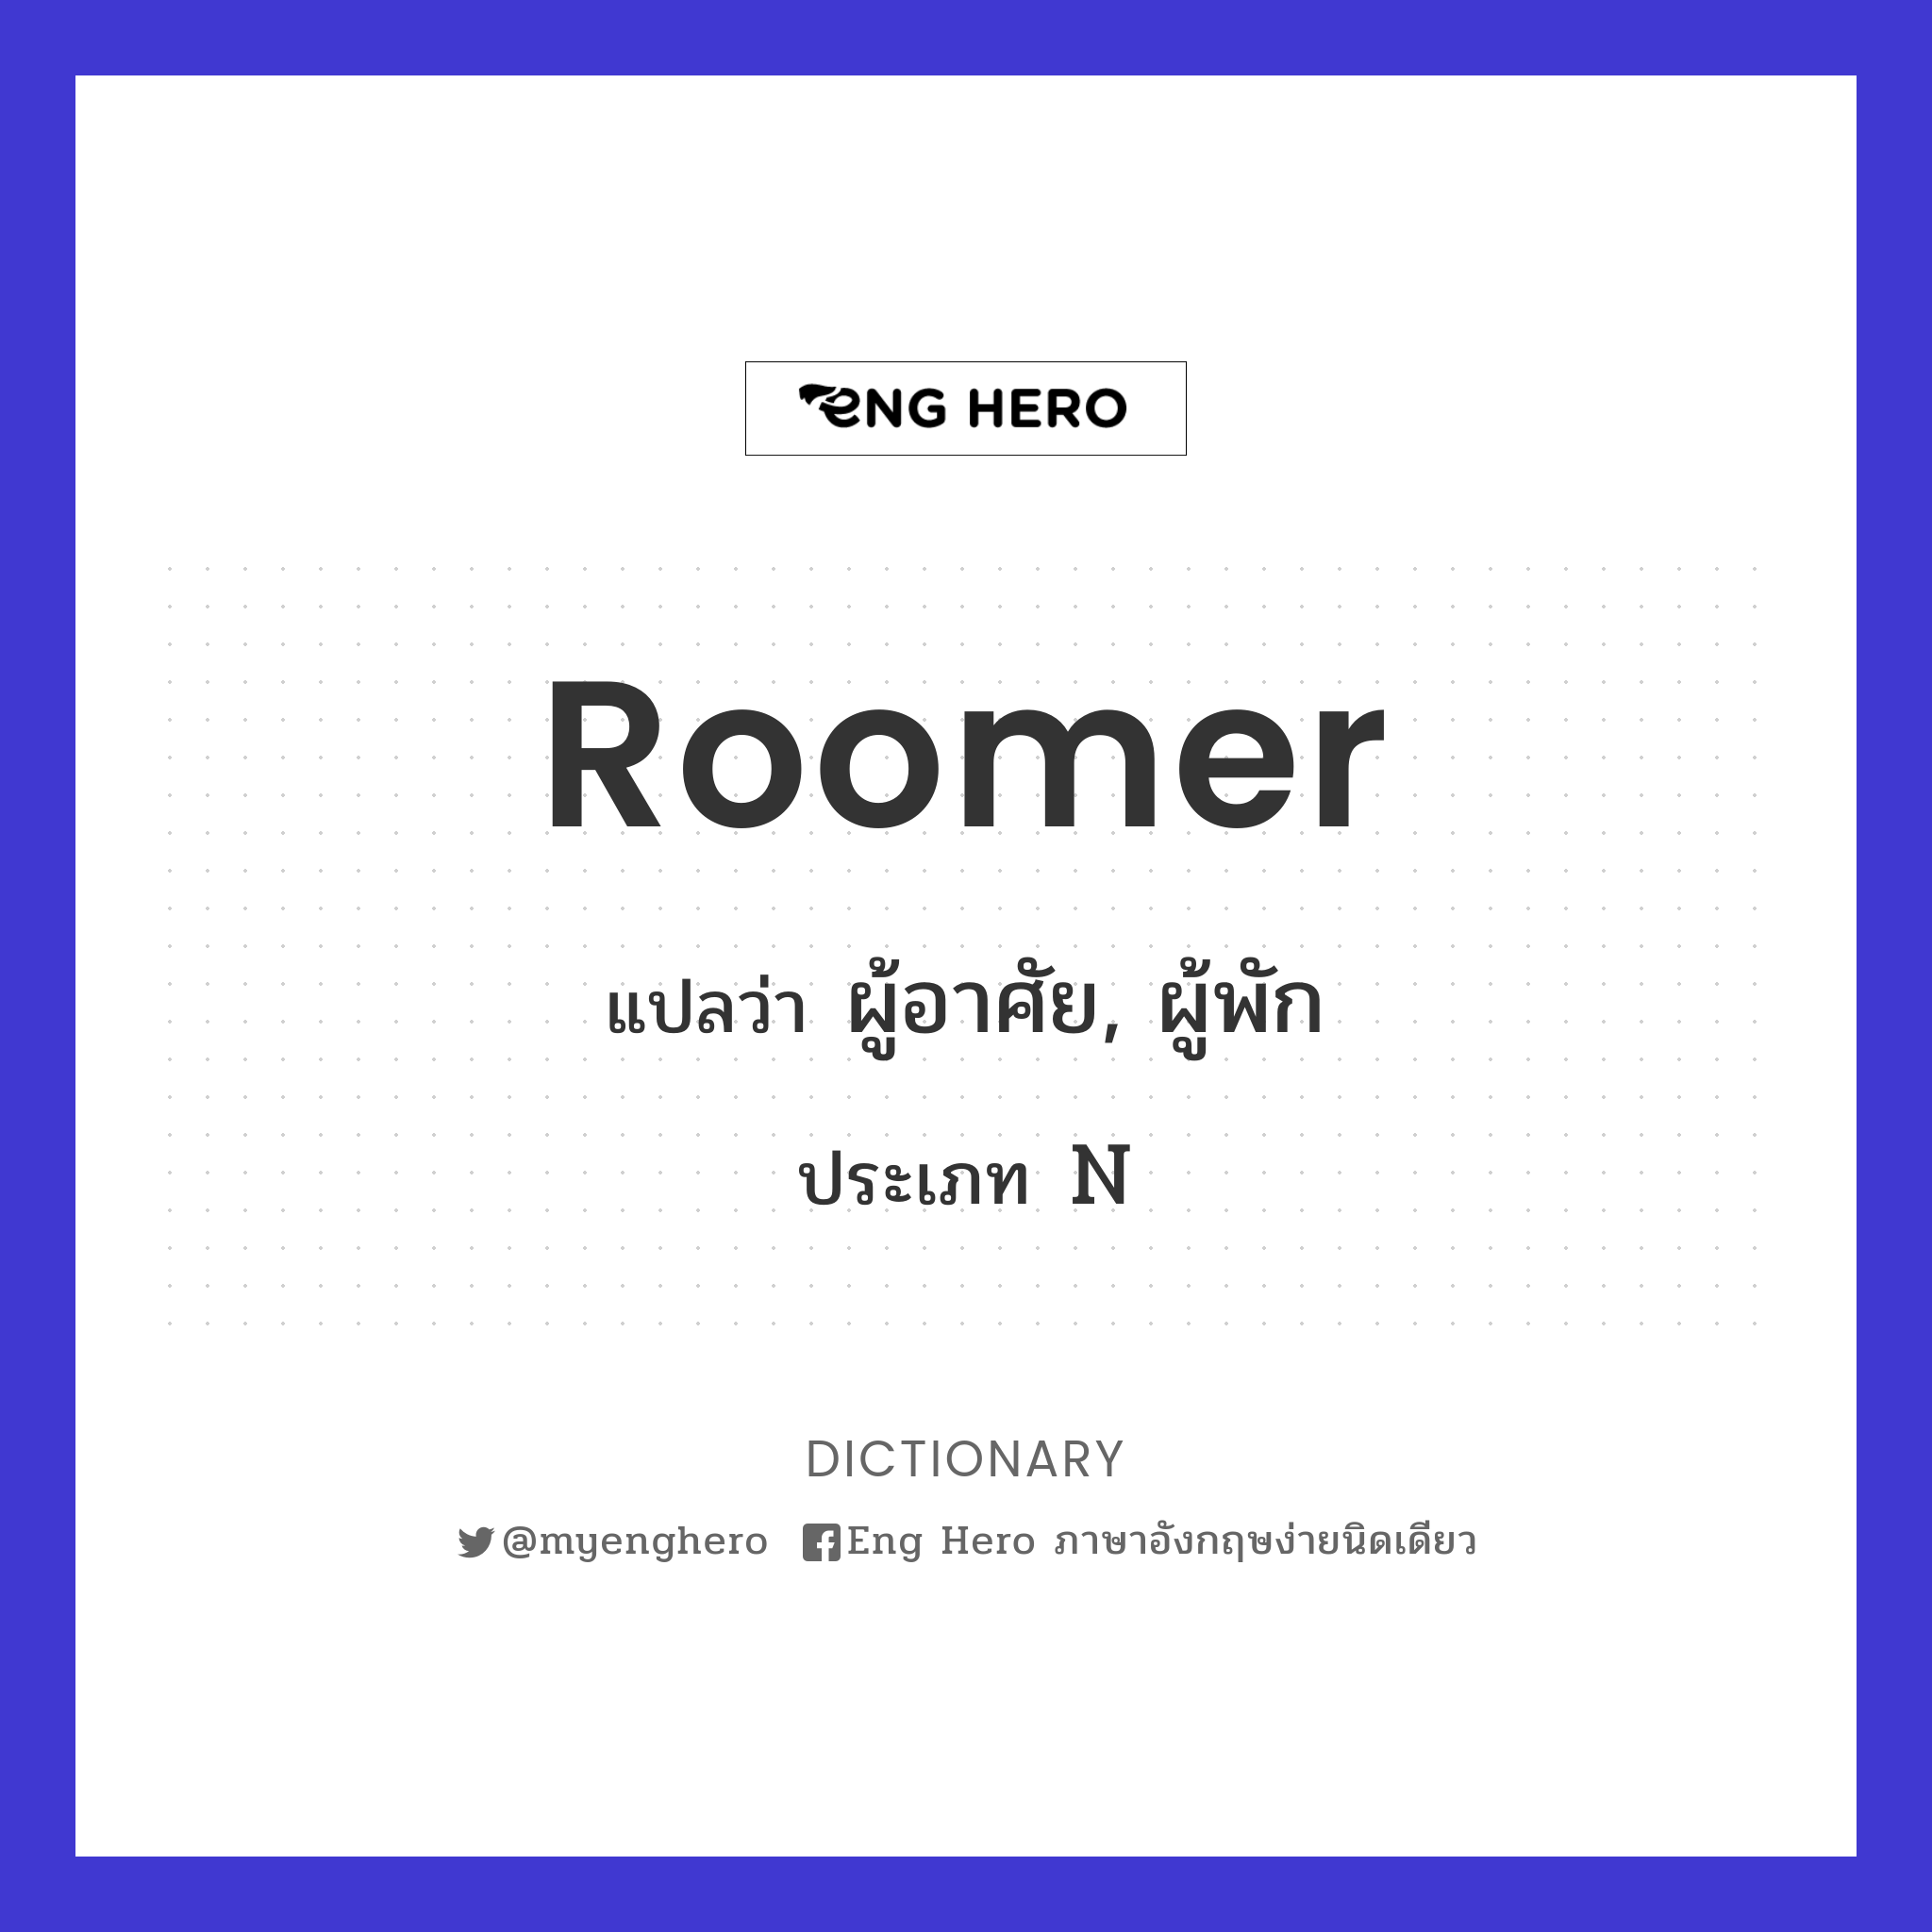 roomer